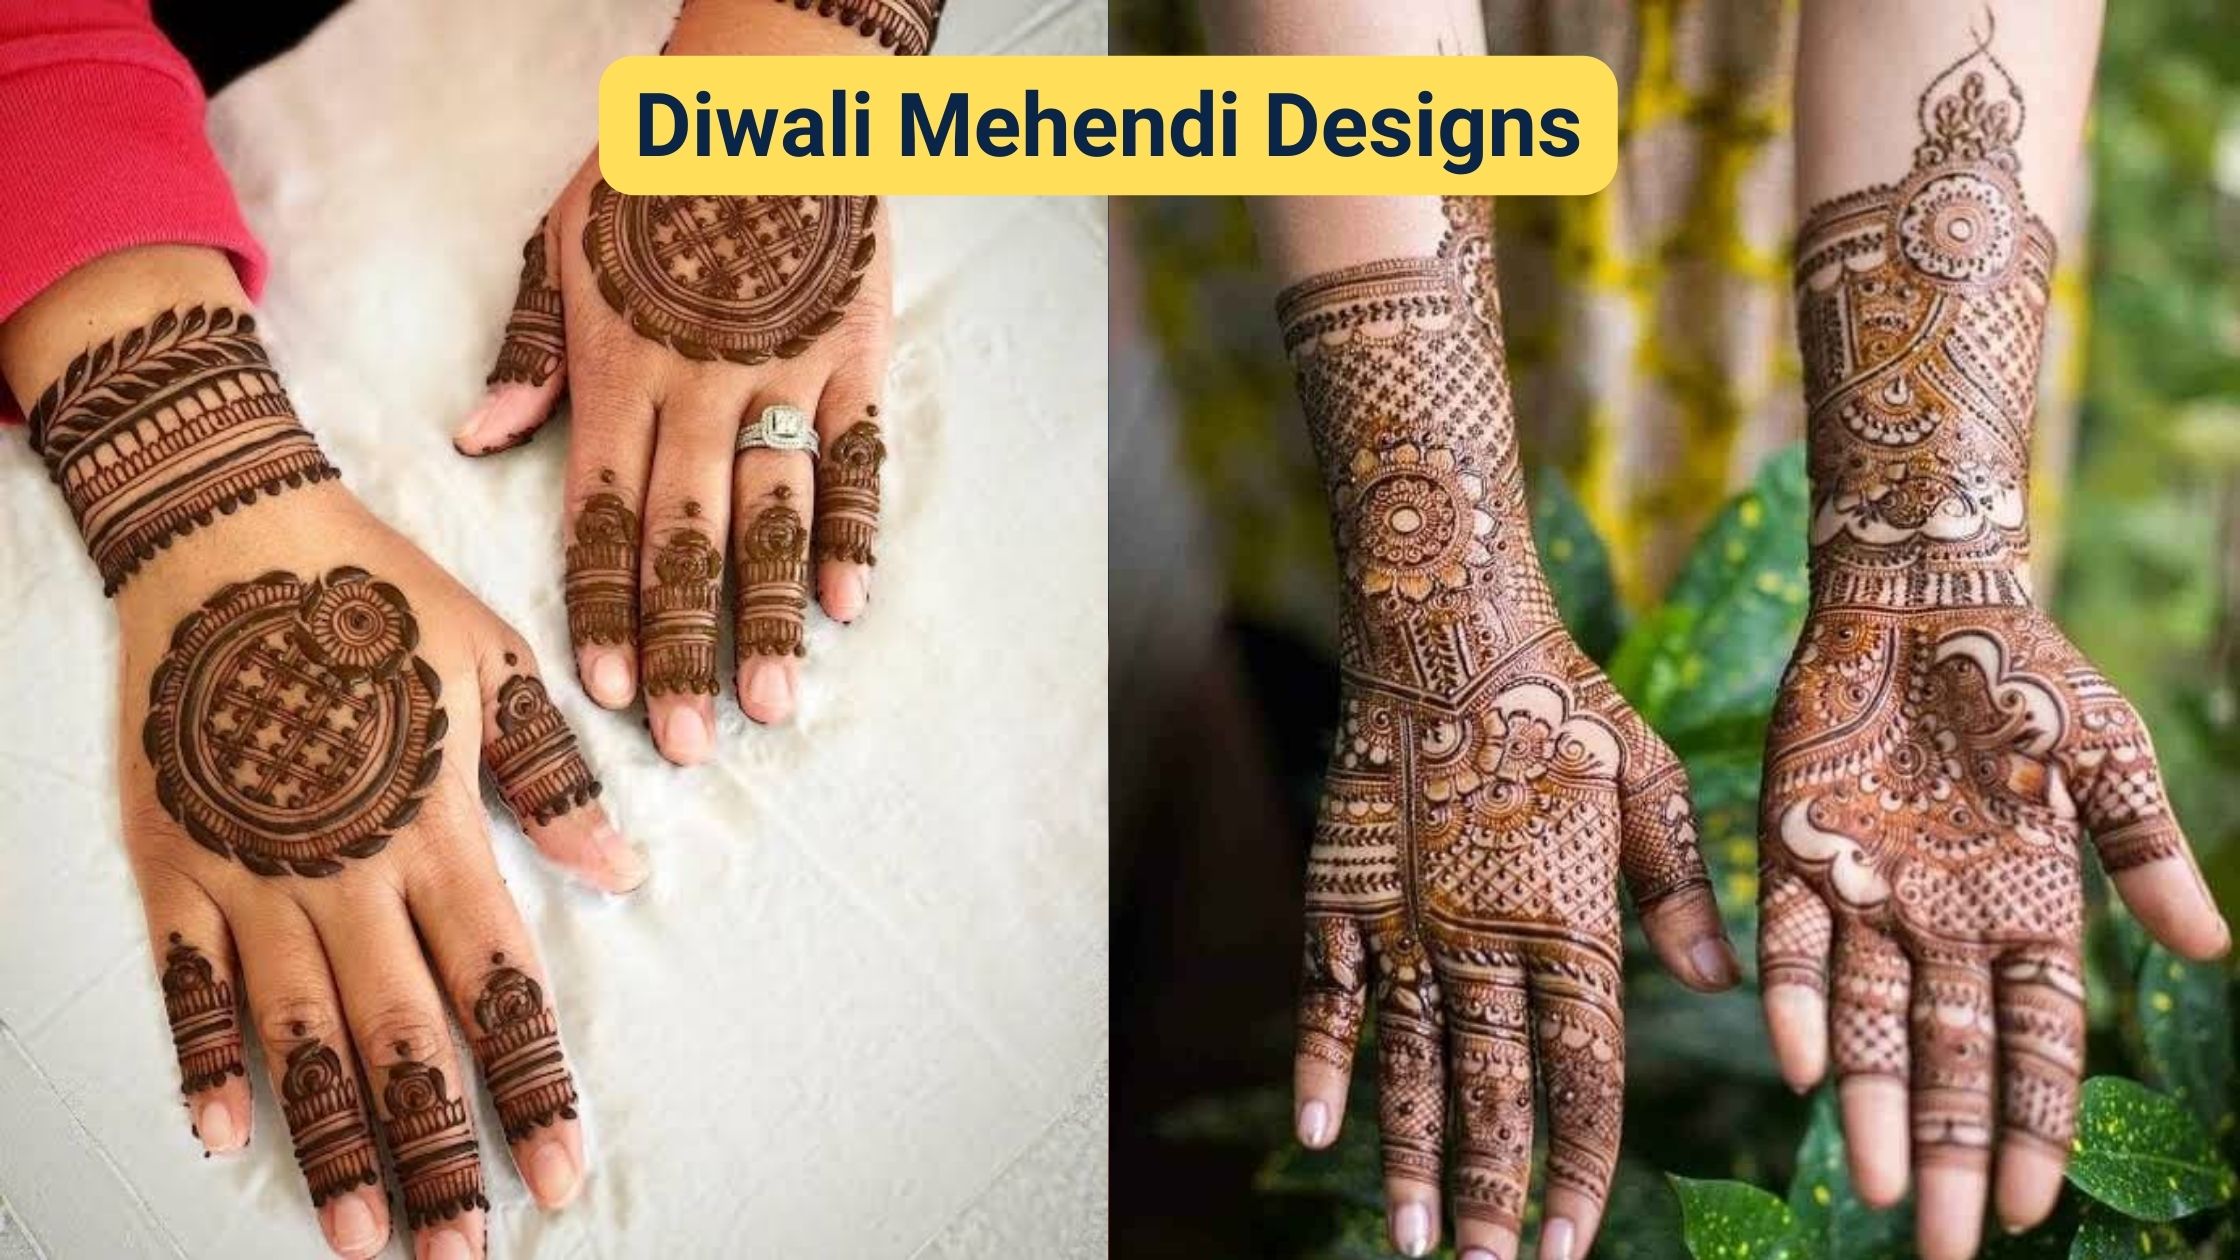 Best Diwali Mehndi Designs - Simple Arabic Mehndi Designs for Diwali